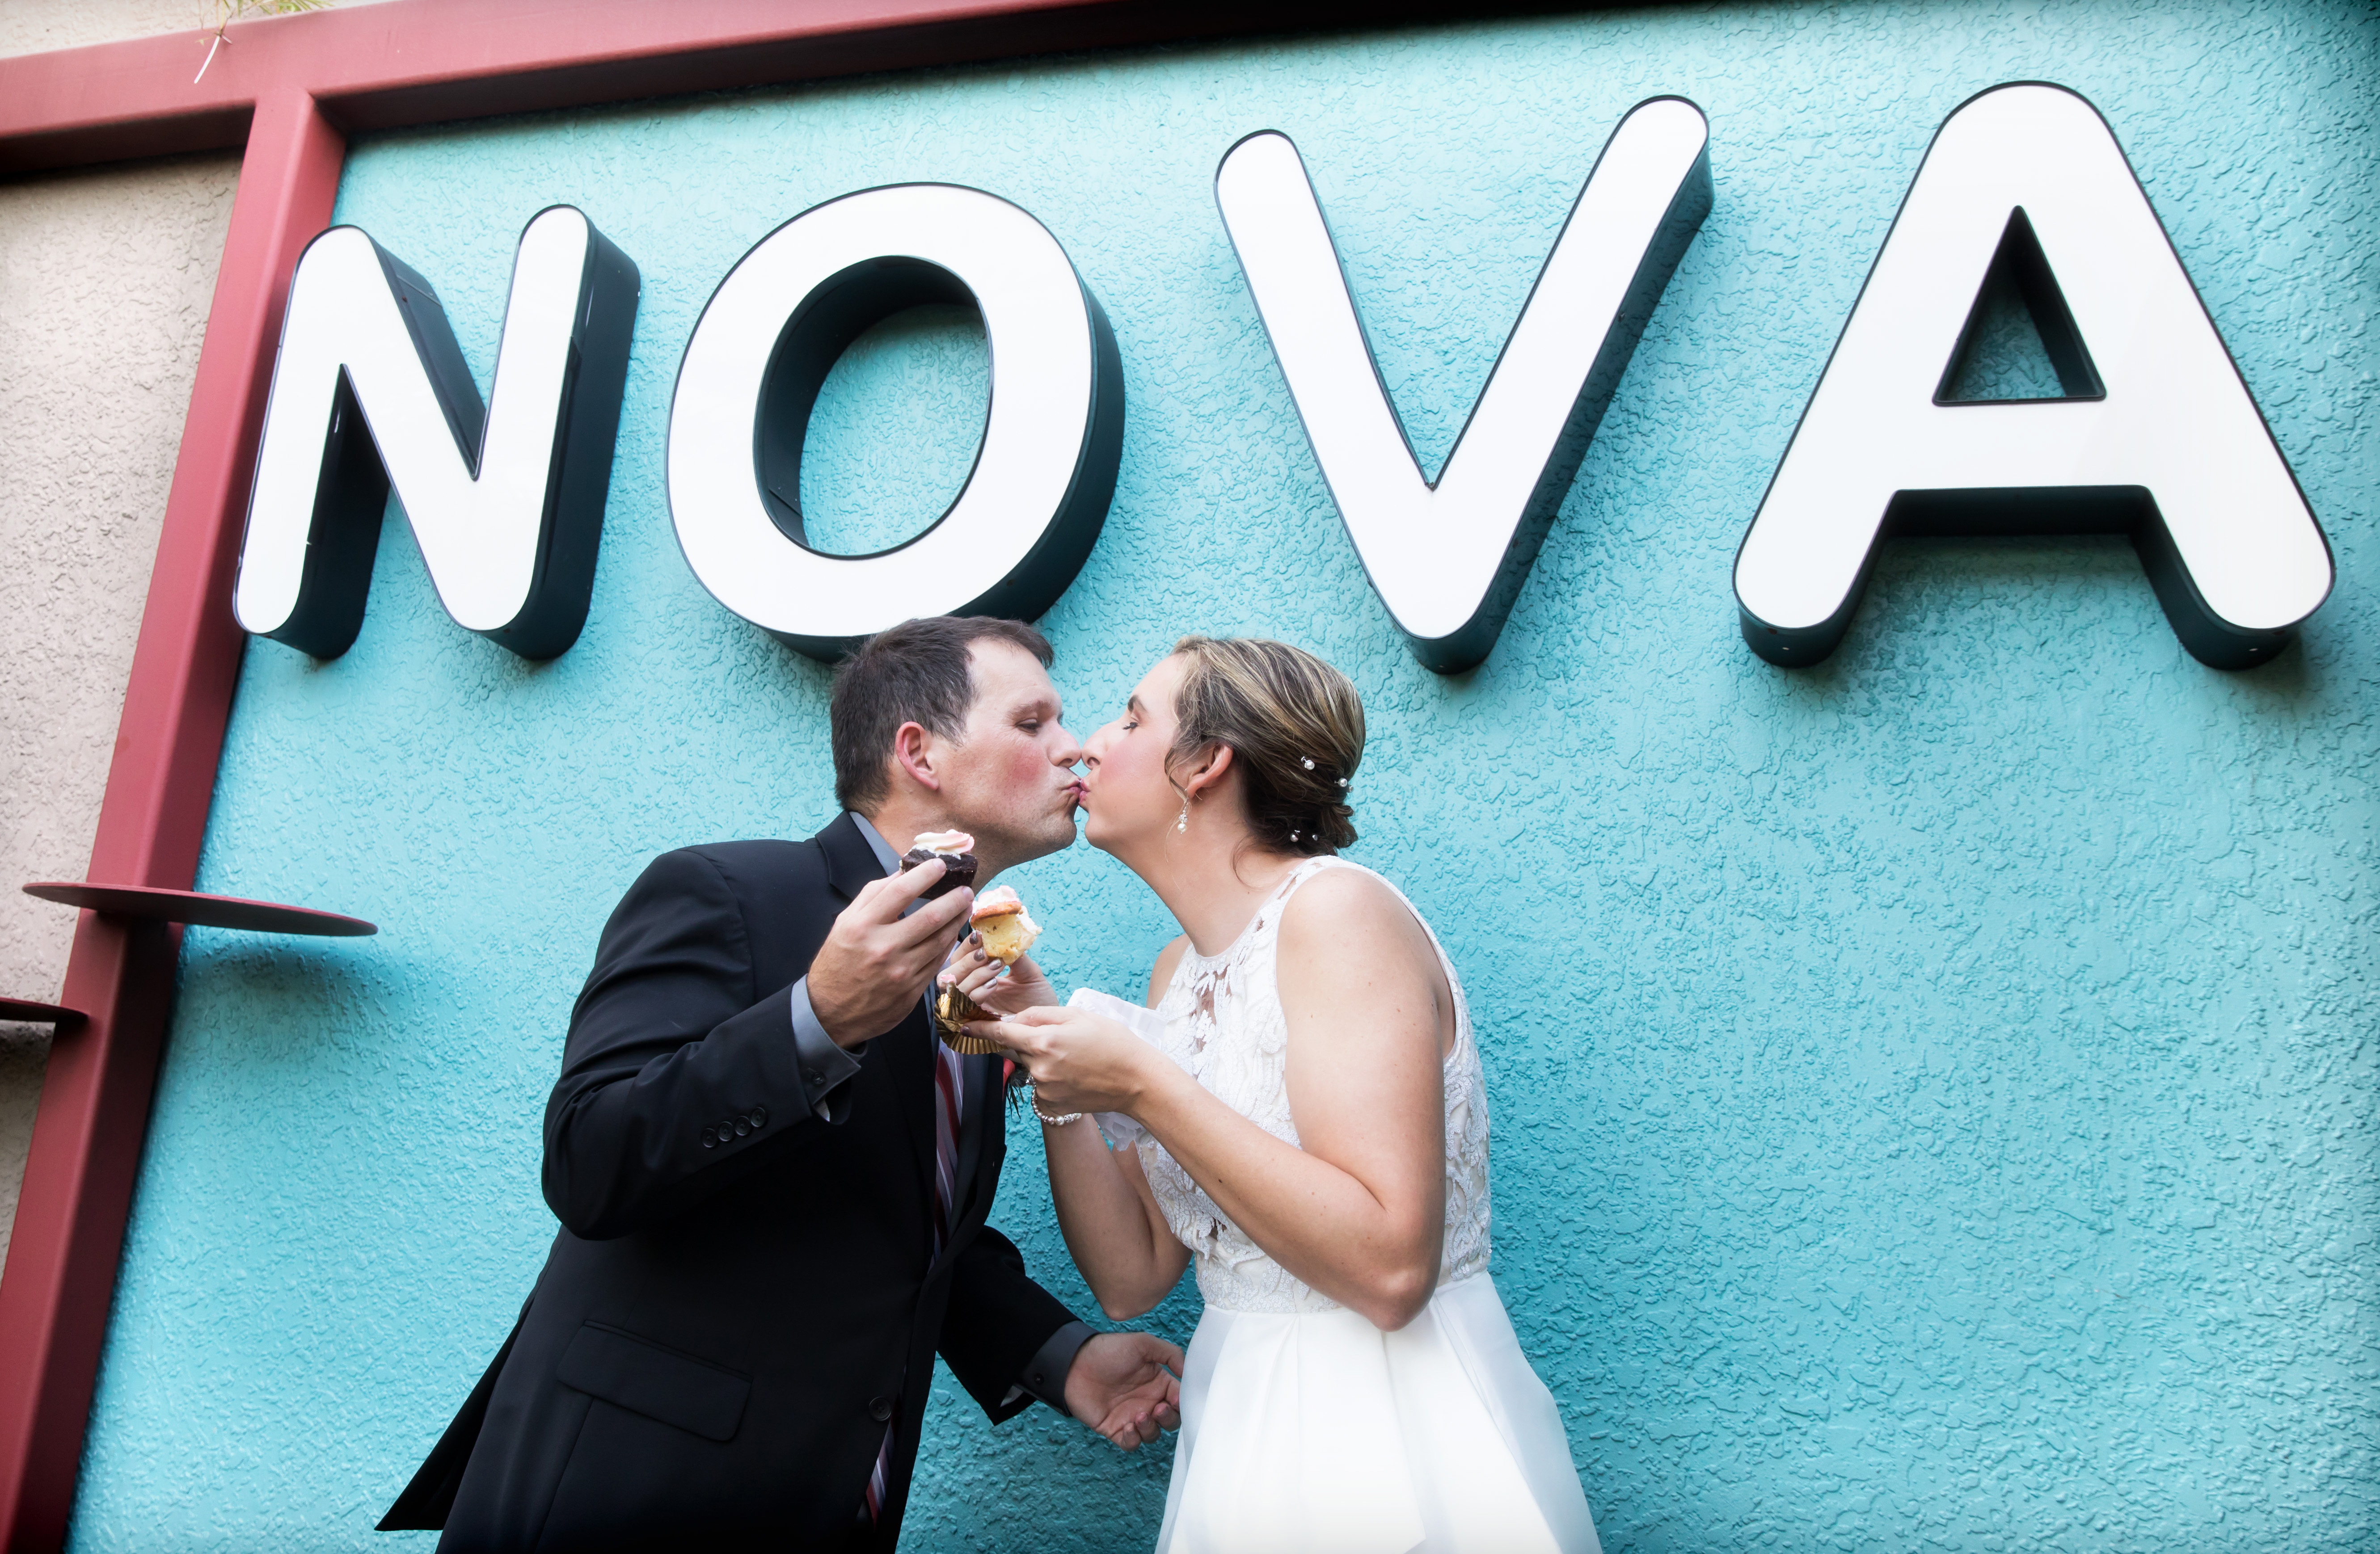 Newlyweds enjoy cupcake at NOVA 535